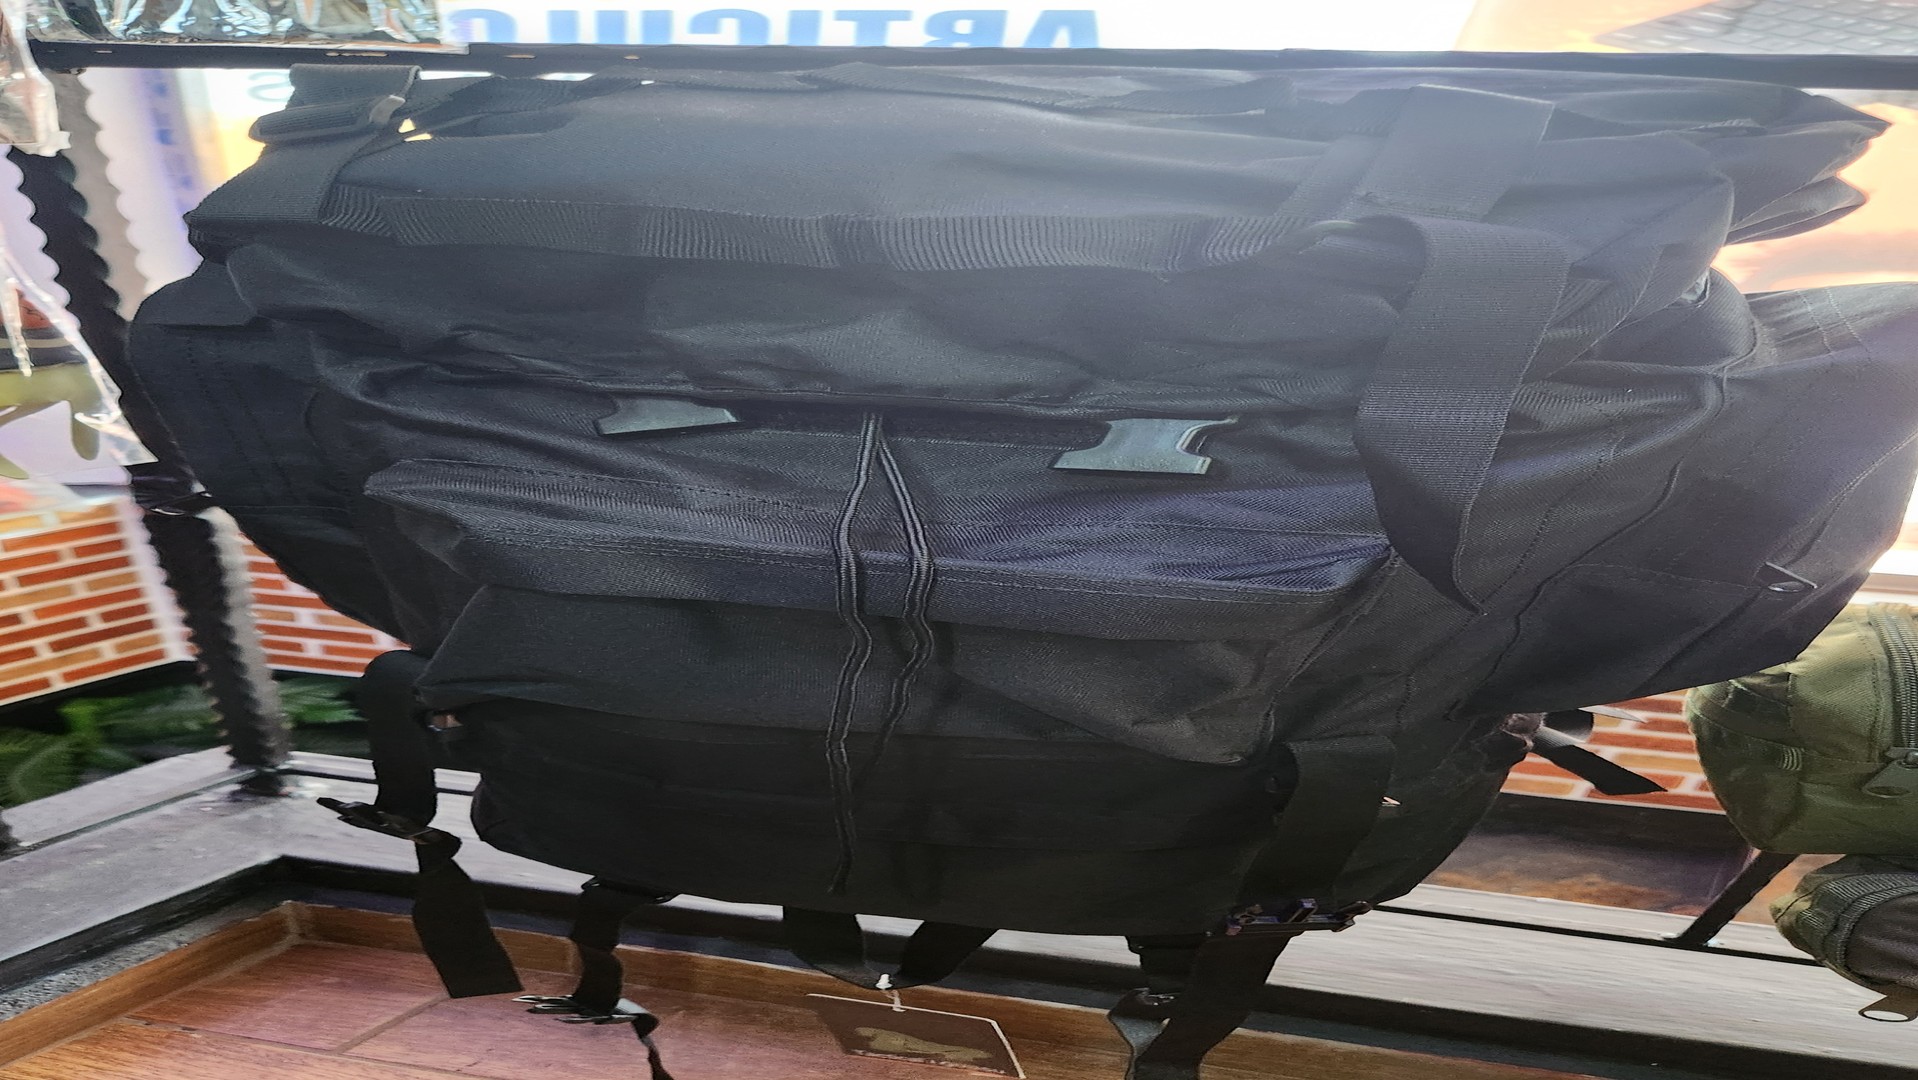 carteras y maletas - Mochila tactica grande negra, bulto, maleta, bolsa.  1